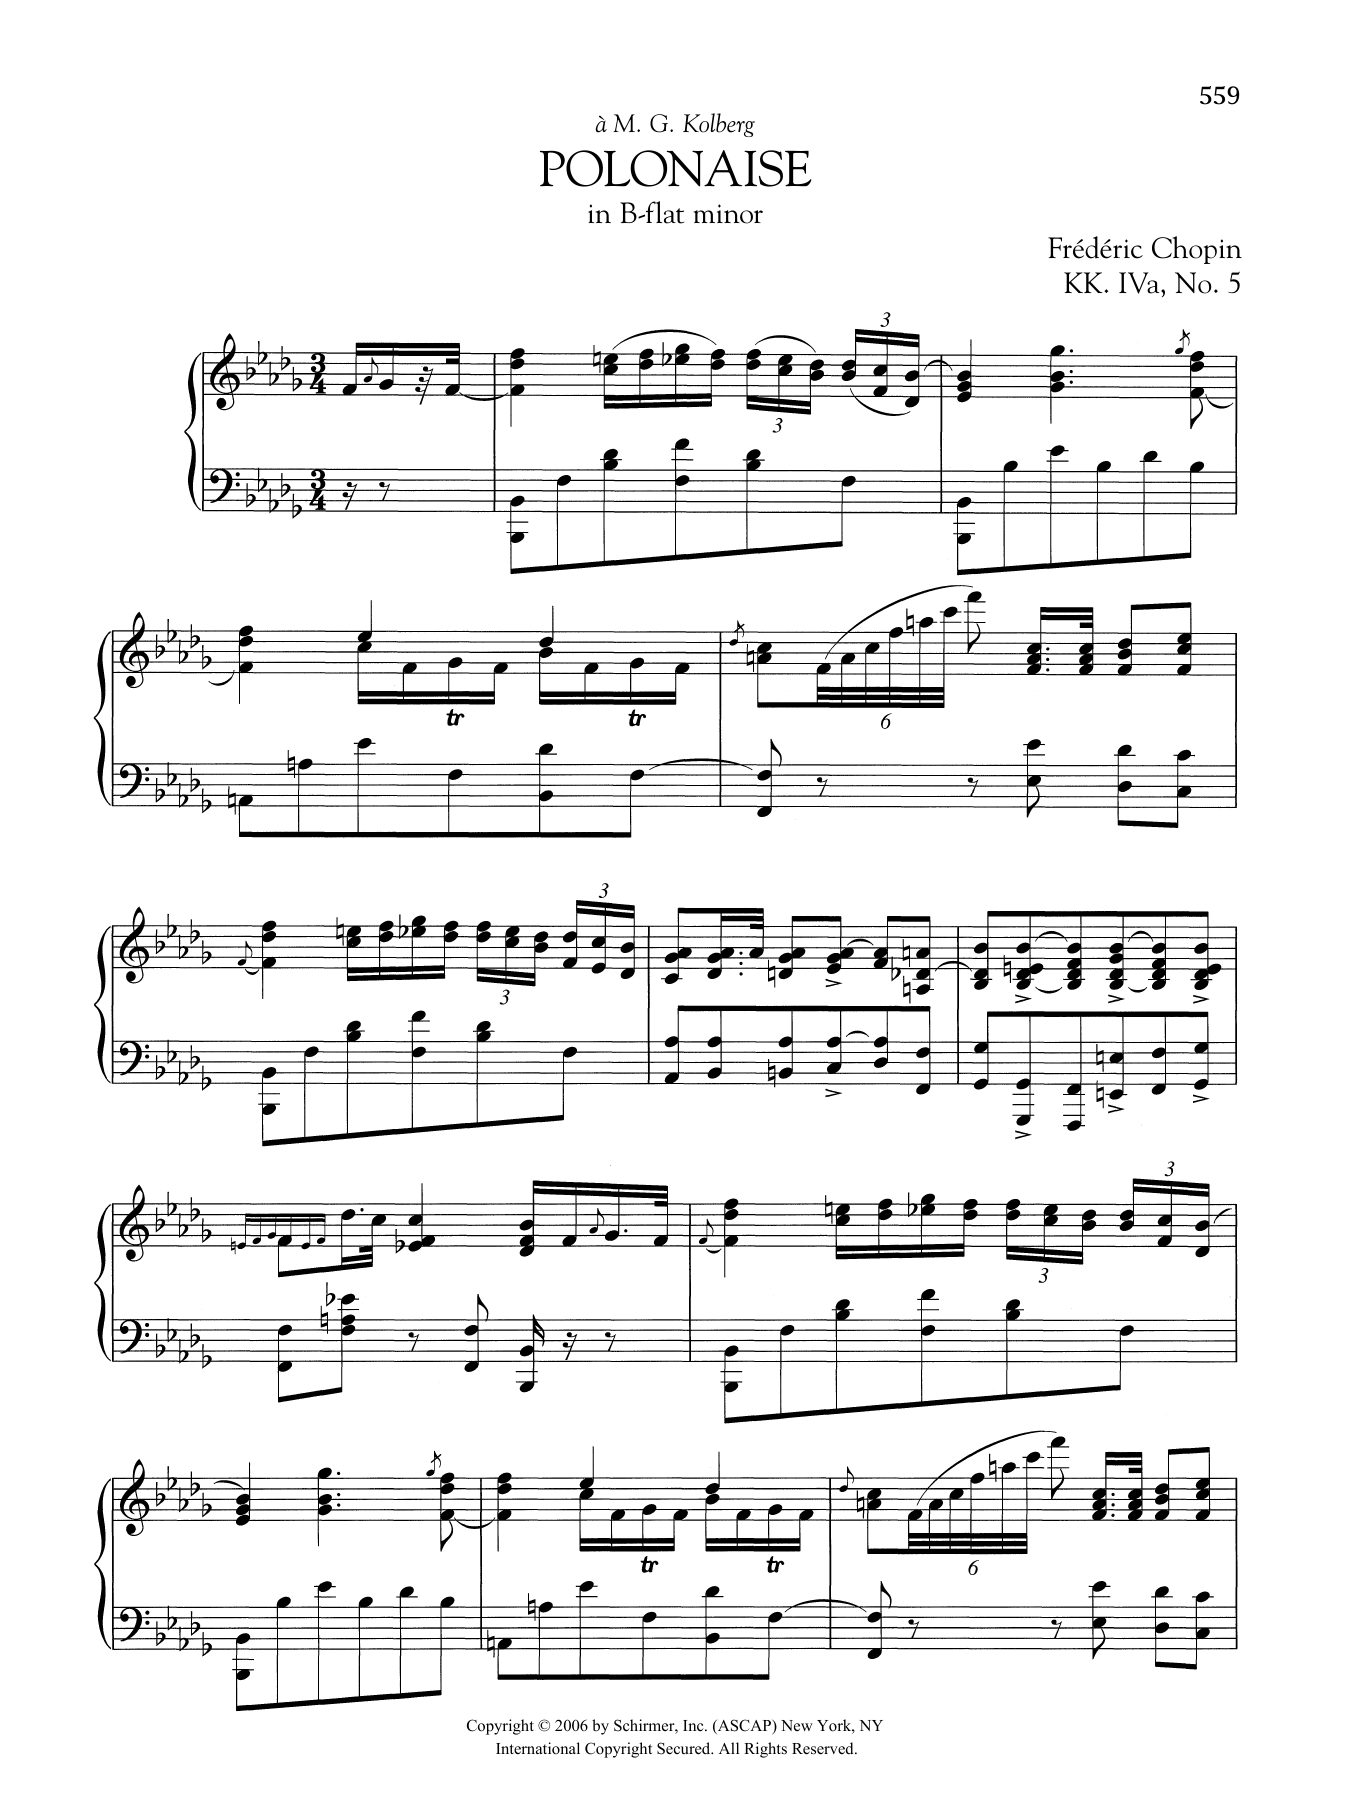 Download Frederic Chopin Polonaise in B-flat minor, KK. IVa, No. Sheet Music